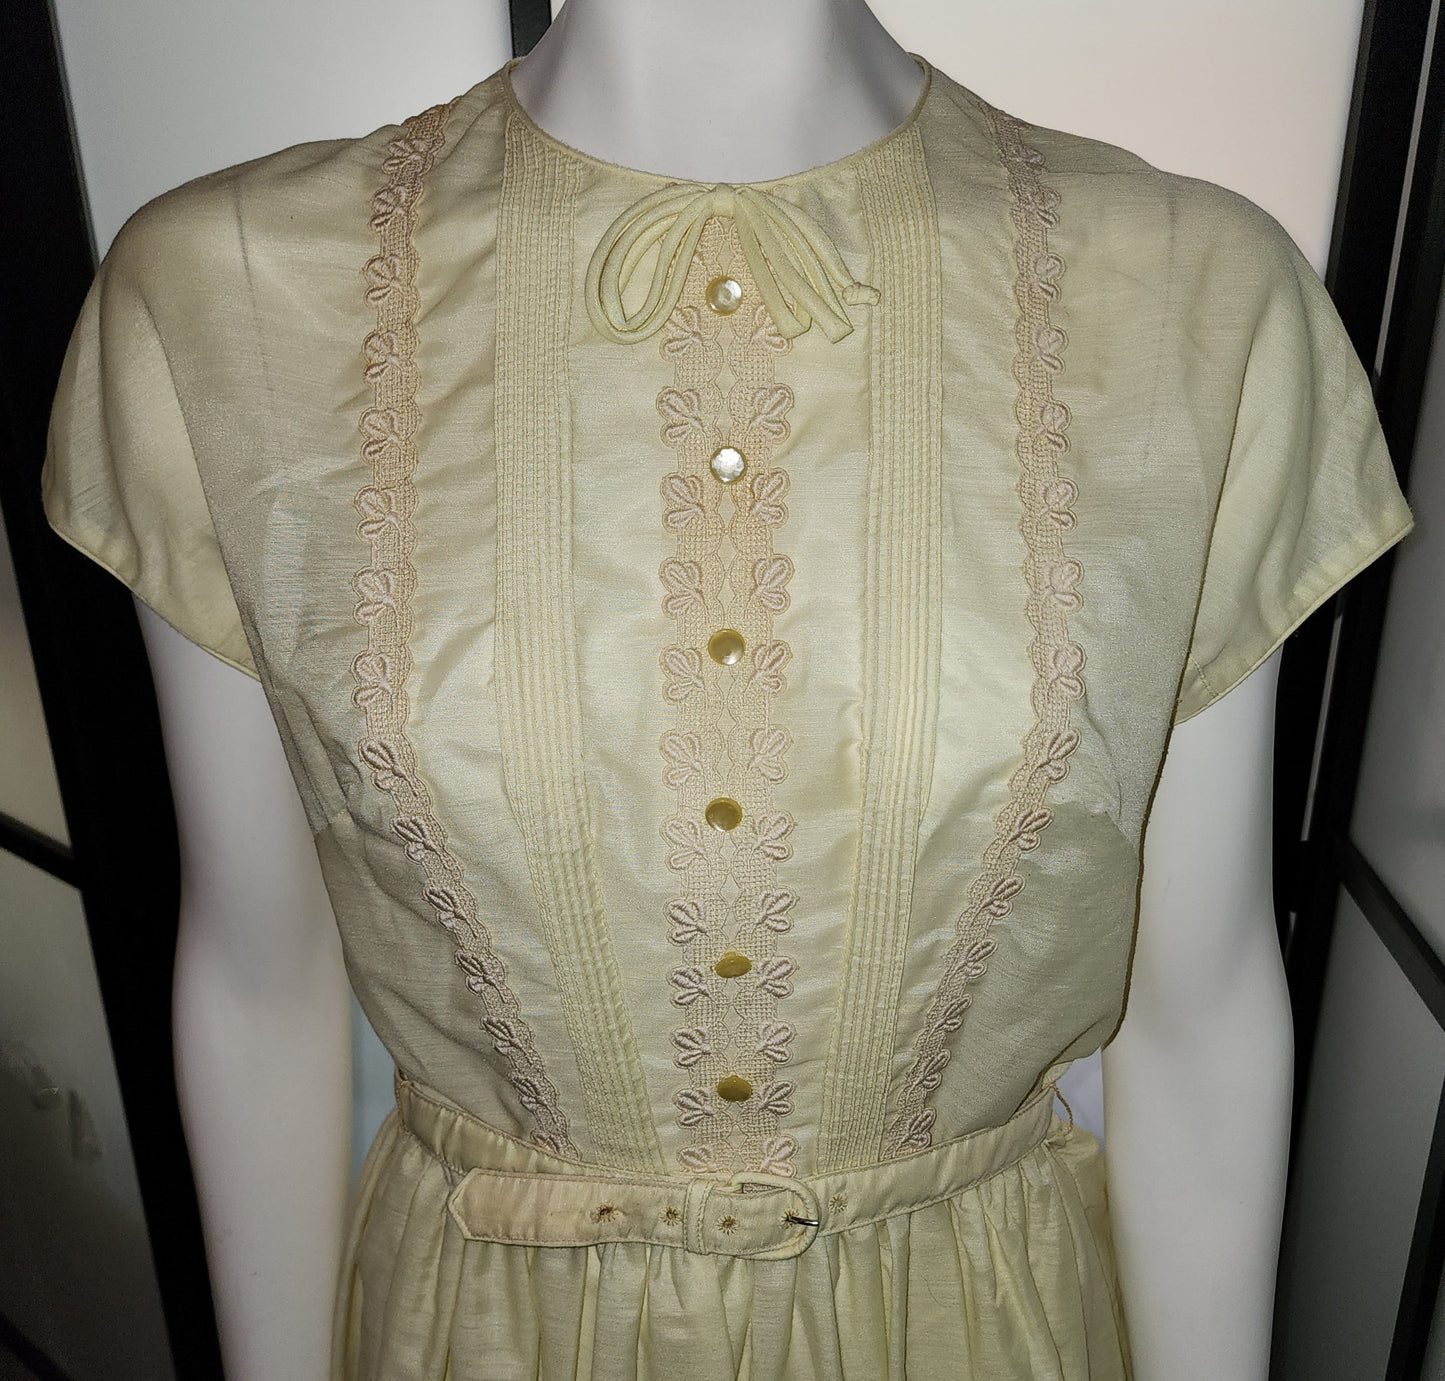 Vintage 1950s Dress Light Yellow Semi Sheer Cotton Blend Day Dress Full Skirt Cute Details Mid Century Rockabilly M